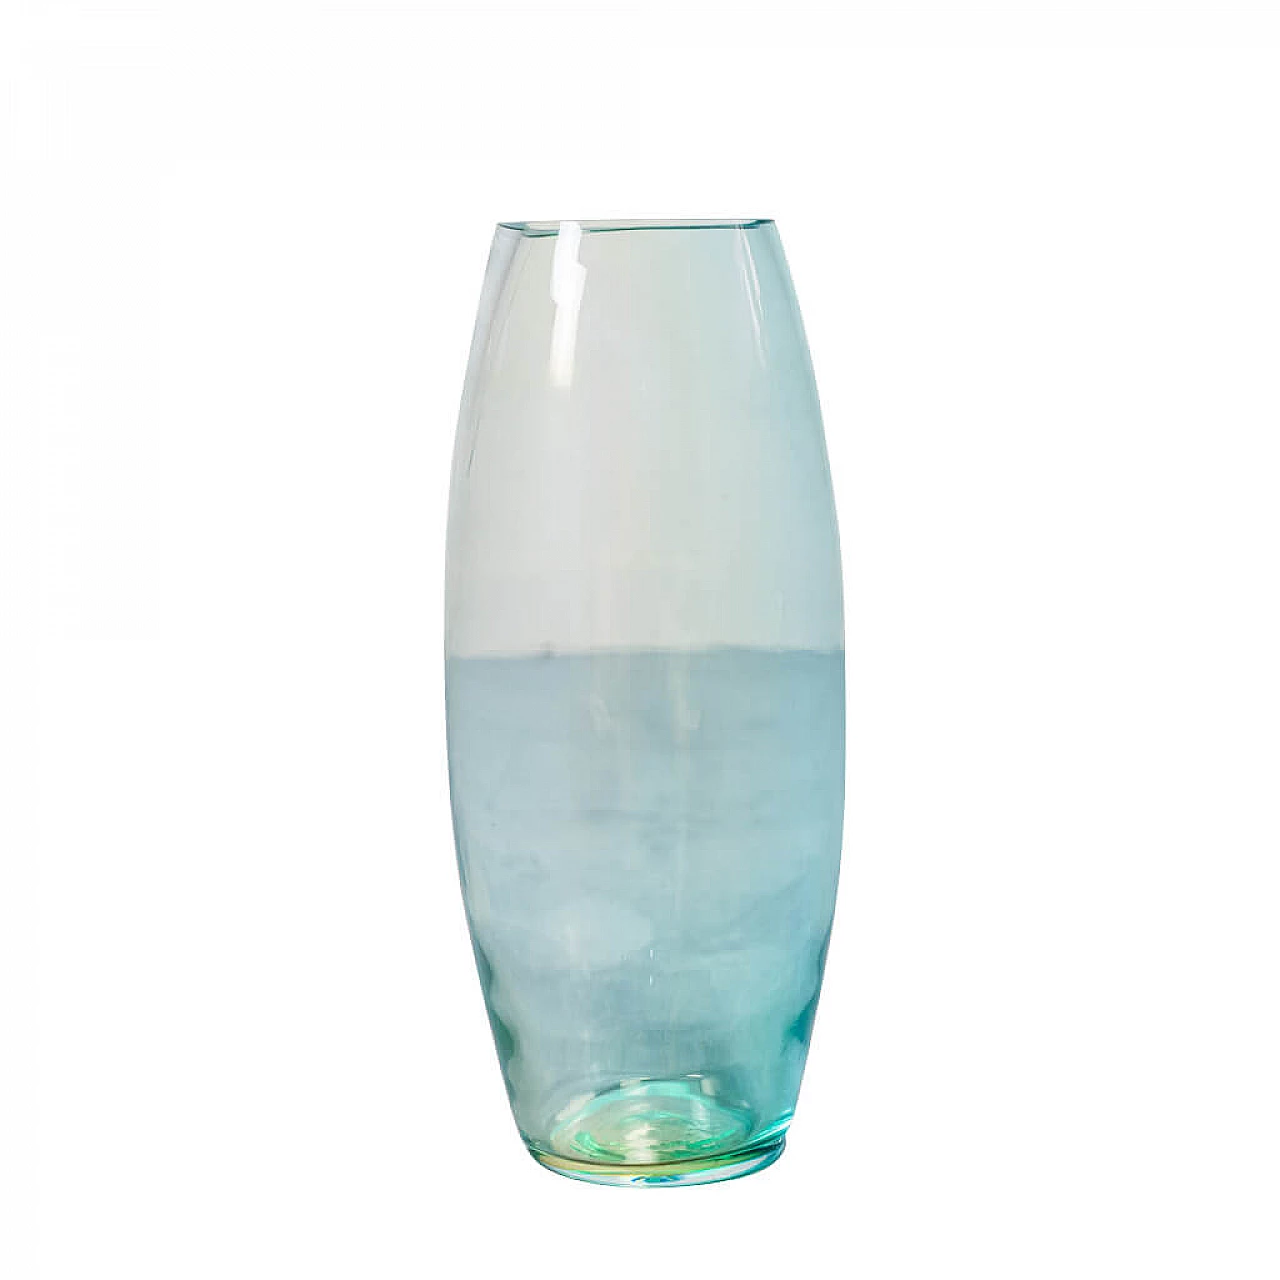 Glass vase produced by V. Nason, 1970s 1257687